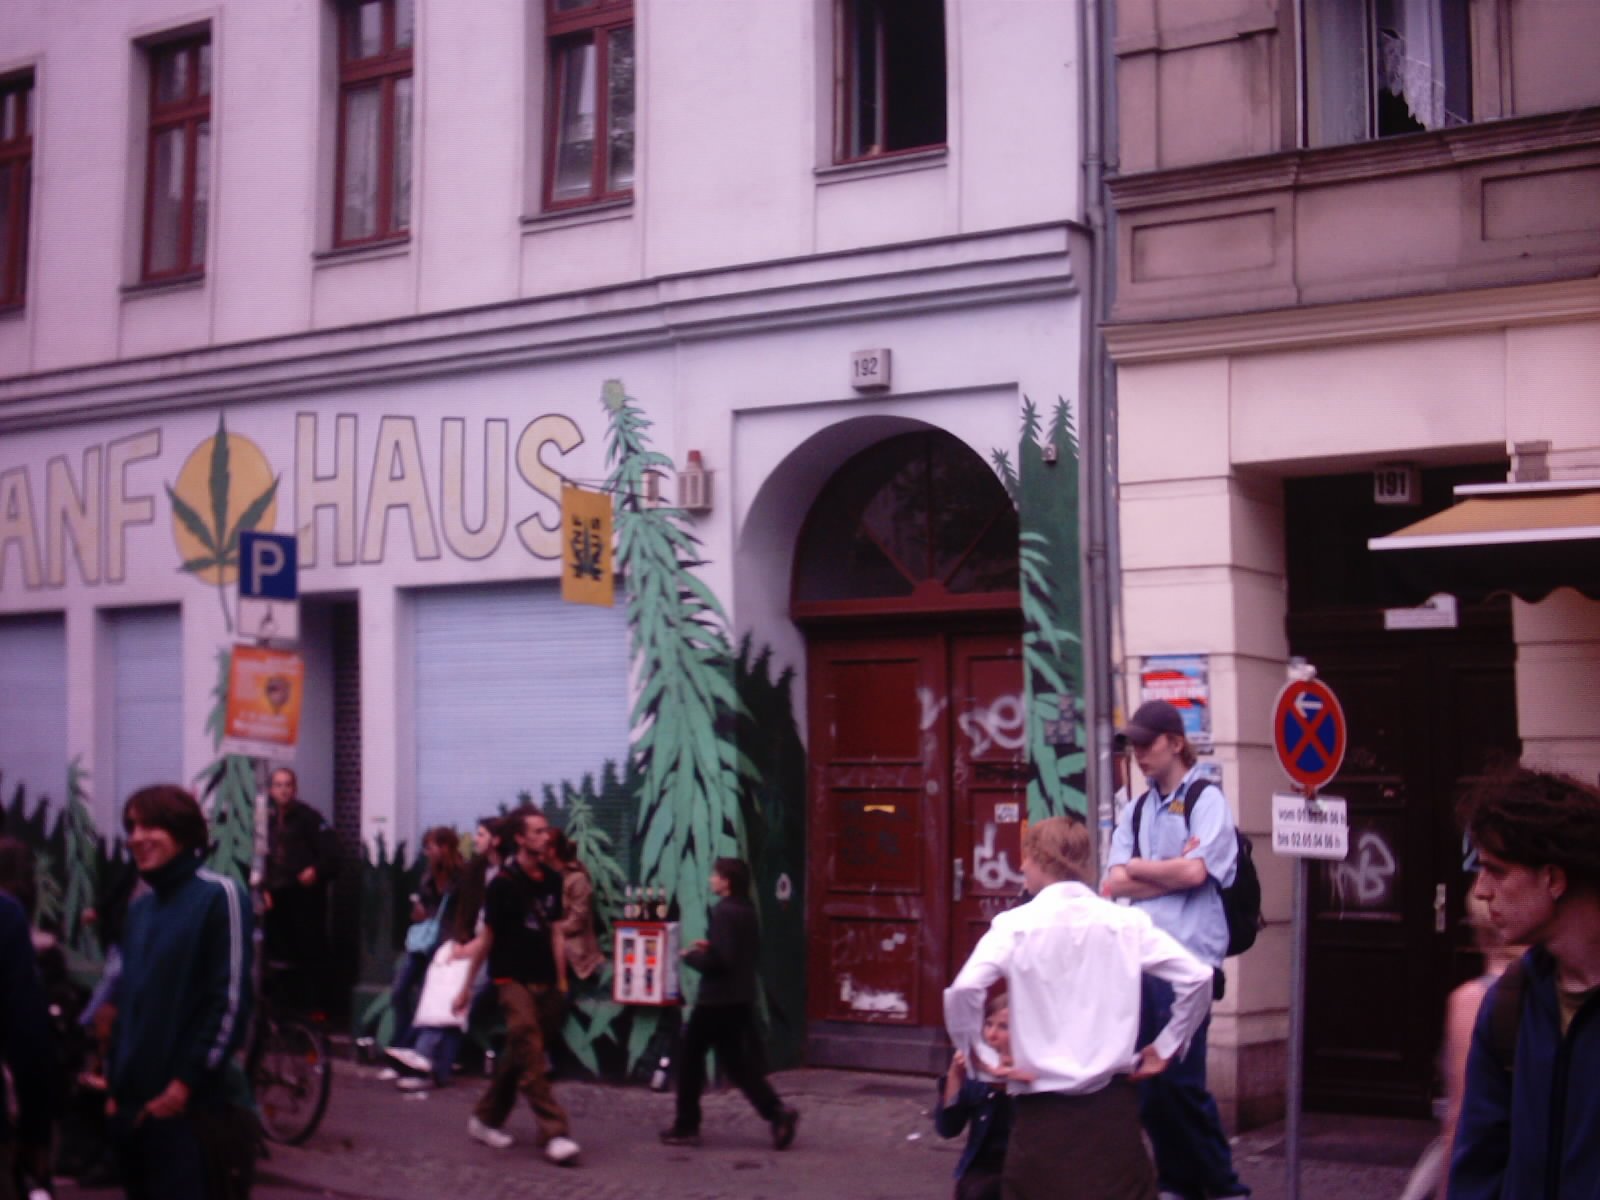 Photo vom Hanfhaus in Kreuzberg am 1. Mai 2004 in Kreuzberg in Berlin (Germany). Copyright by Kim Hartley.